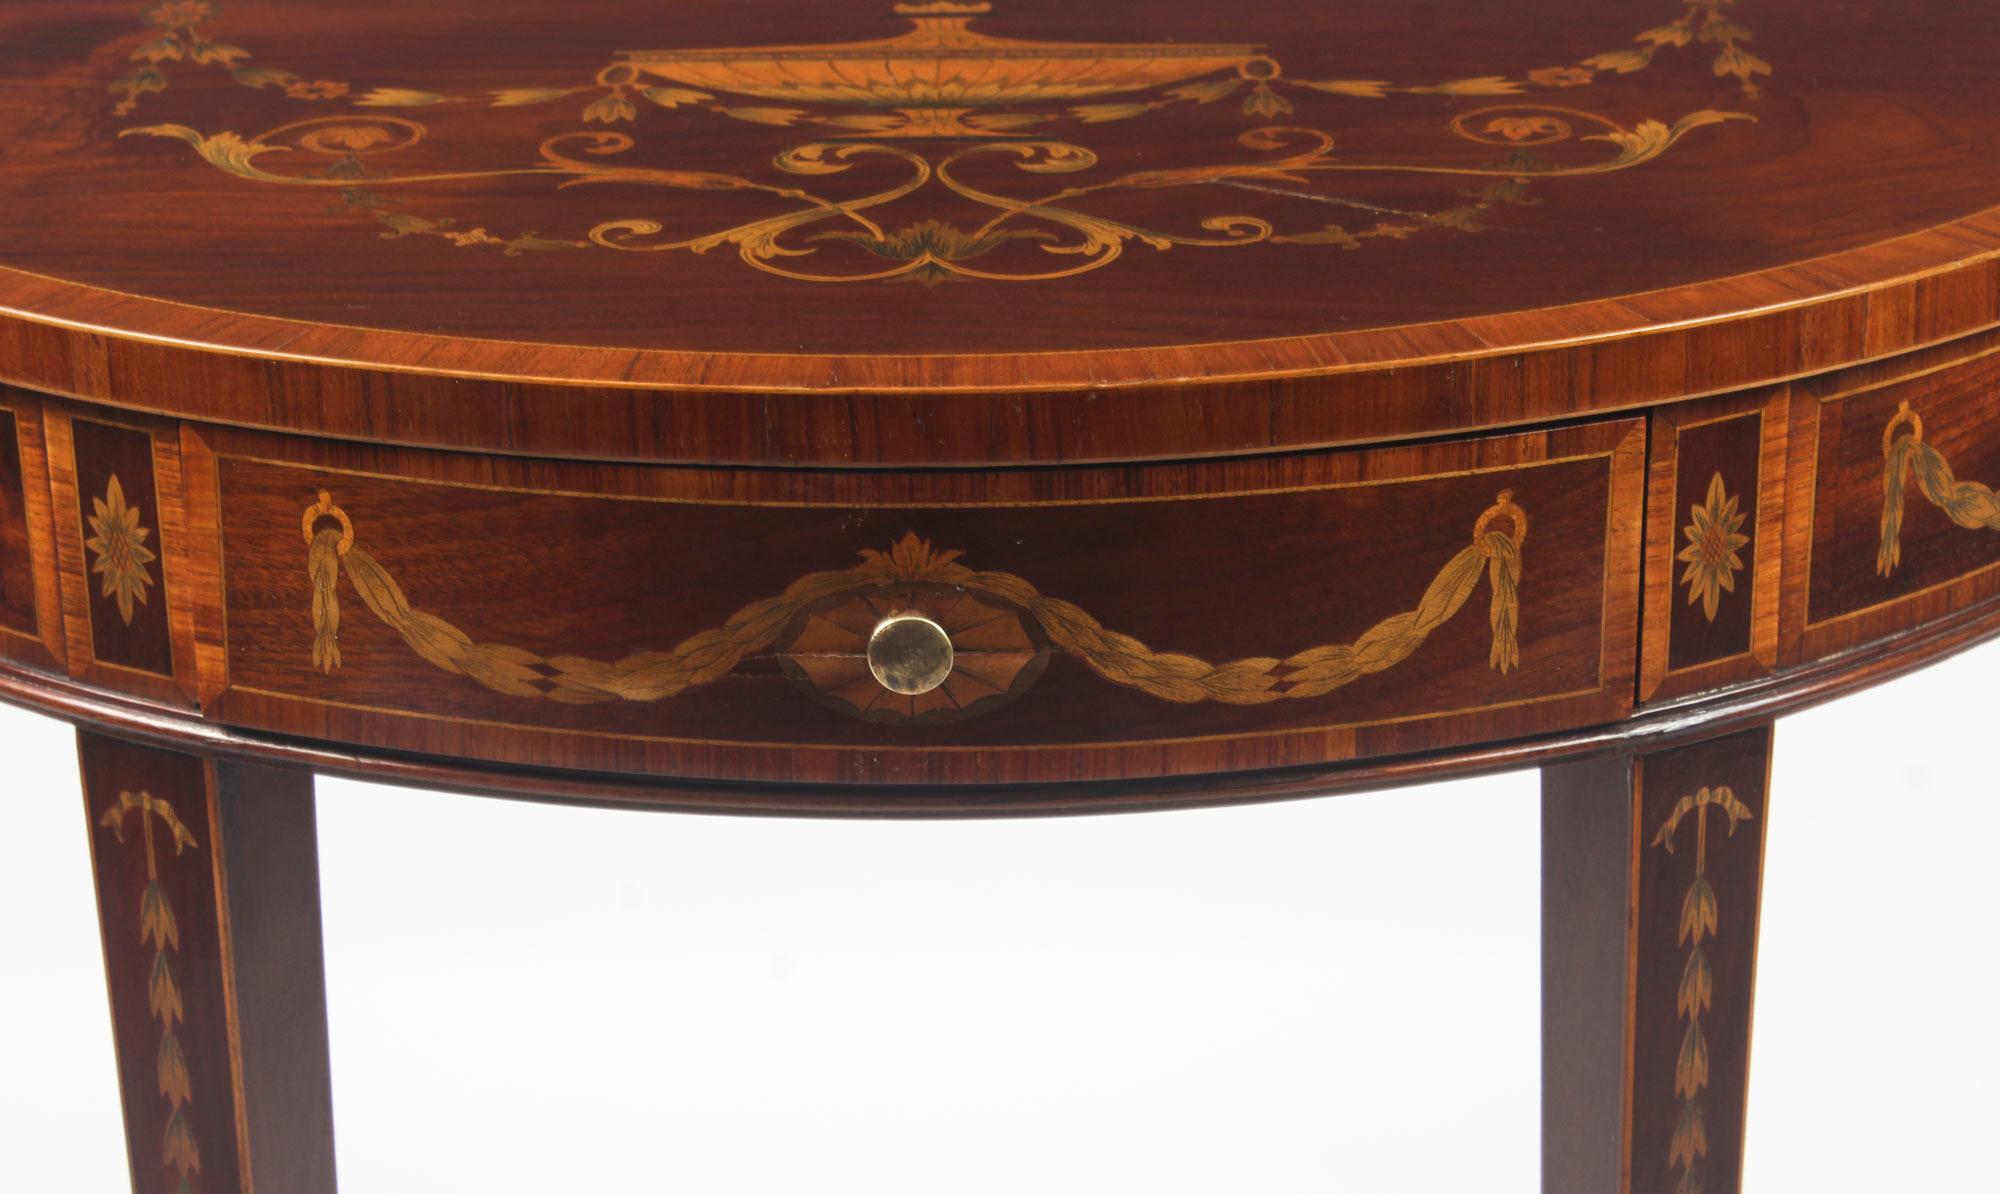 Regency Revival Antique Console Tables 19th Century